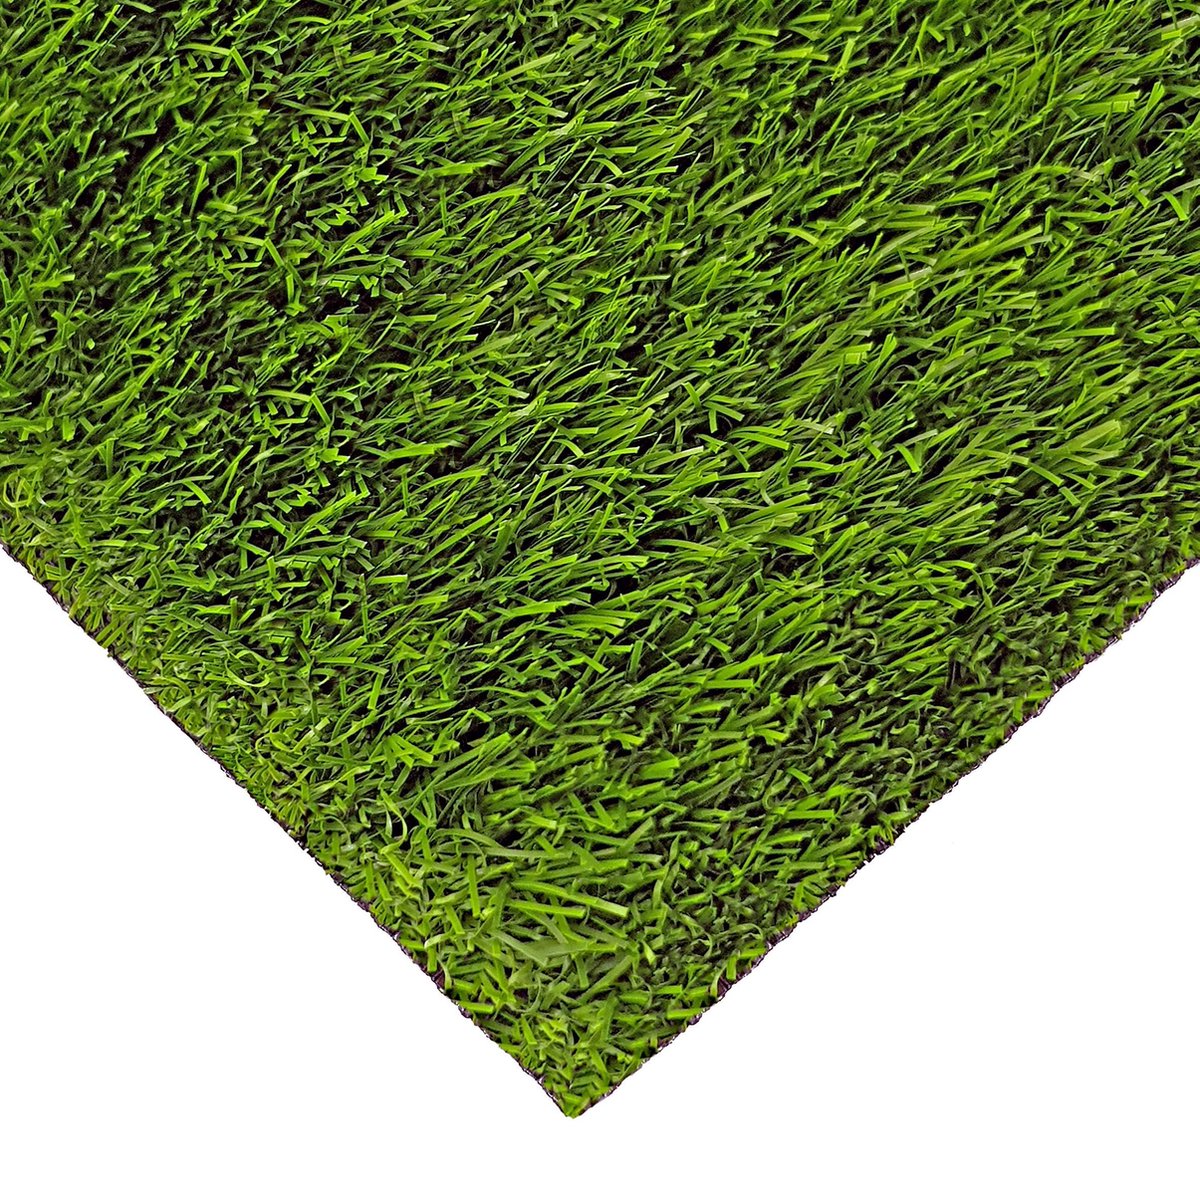 Kunstgras Tapijt RAINBOW Emerald Green - 2x15M - 25mm|artificial grass|gazon artificiel|....|tuin|balkon|terras|kinderkamer|speelkamer|grastapijt|grasmat|buiten|binnen|kerst